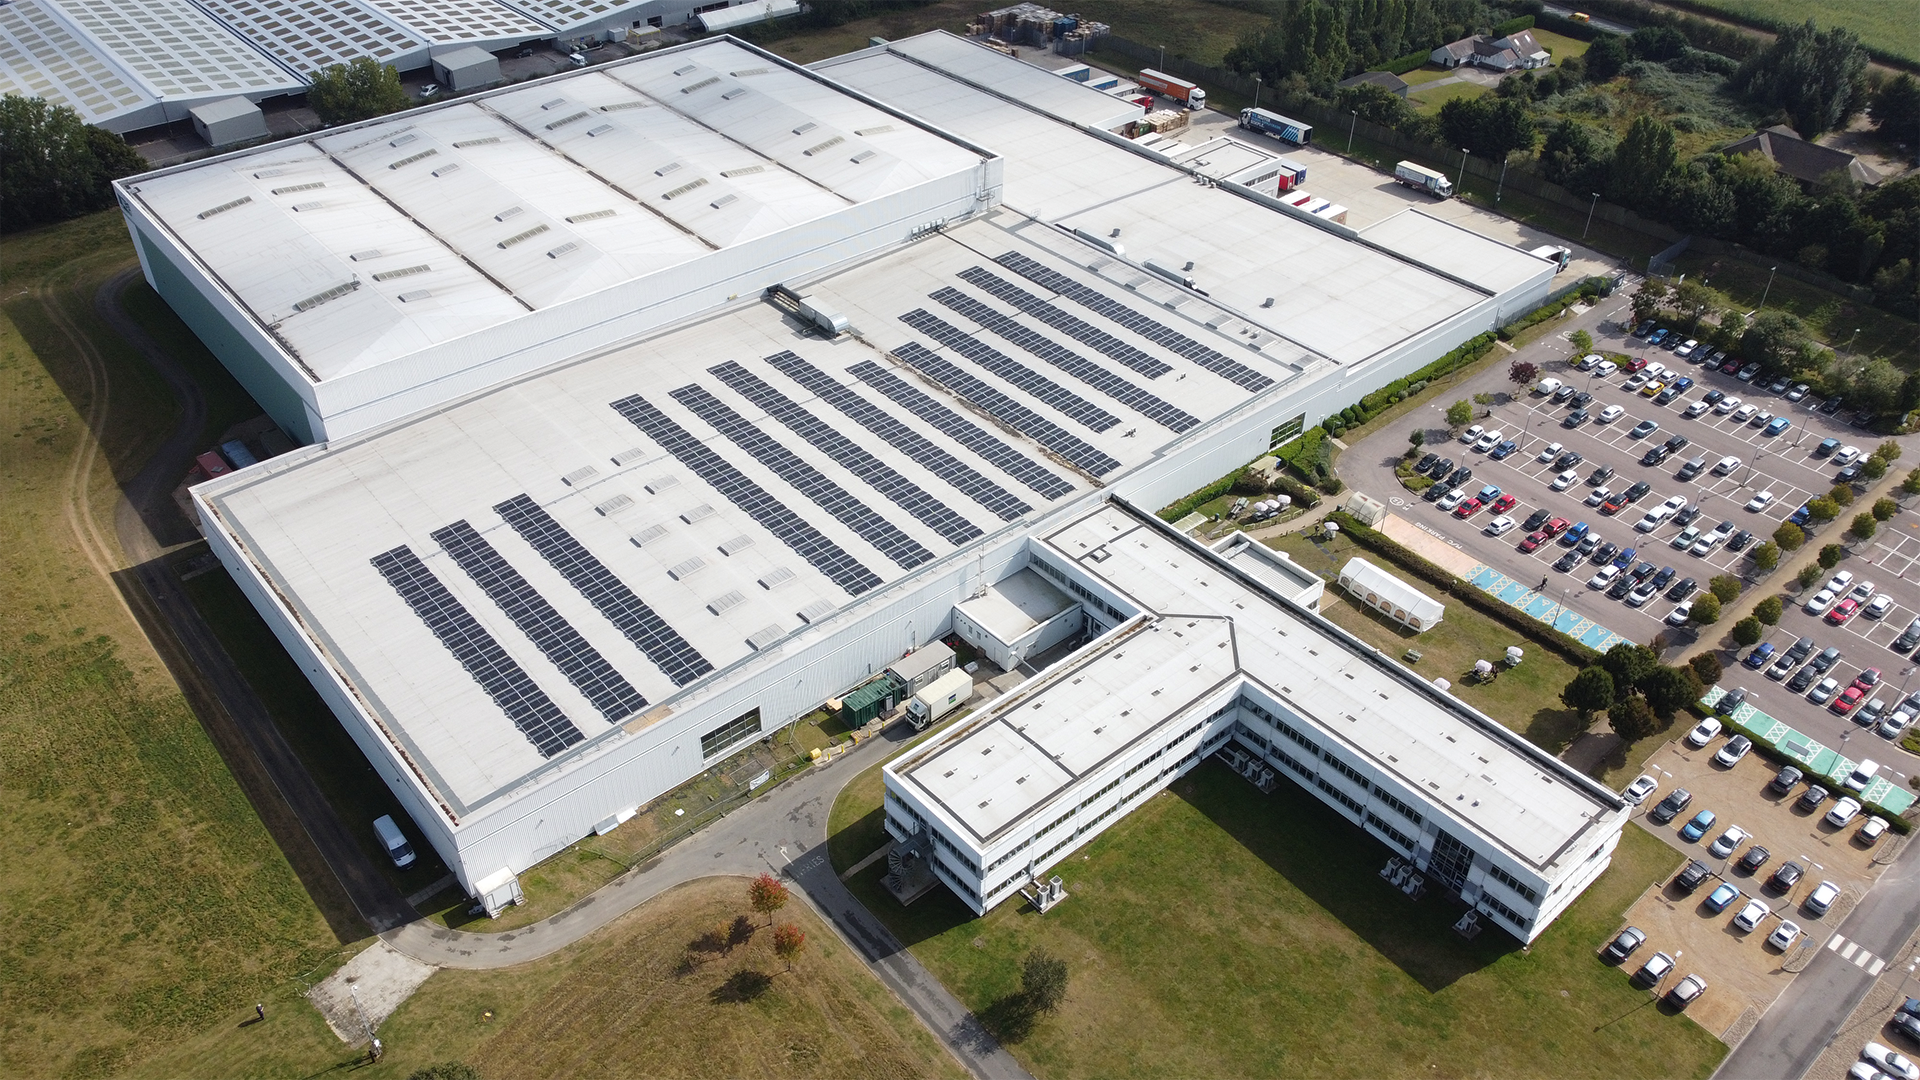 Penguin Random House has installed more than 1,000 solar panels on its warehouse premises